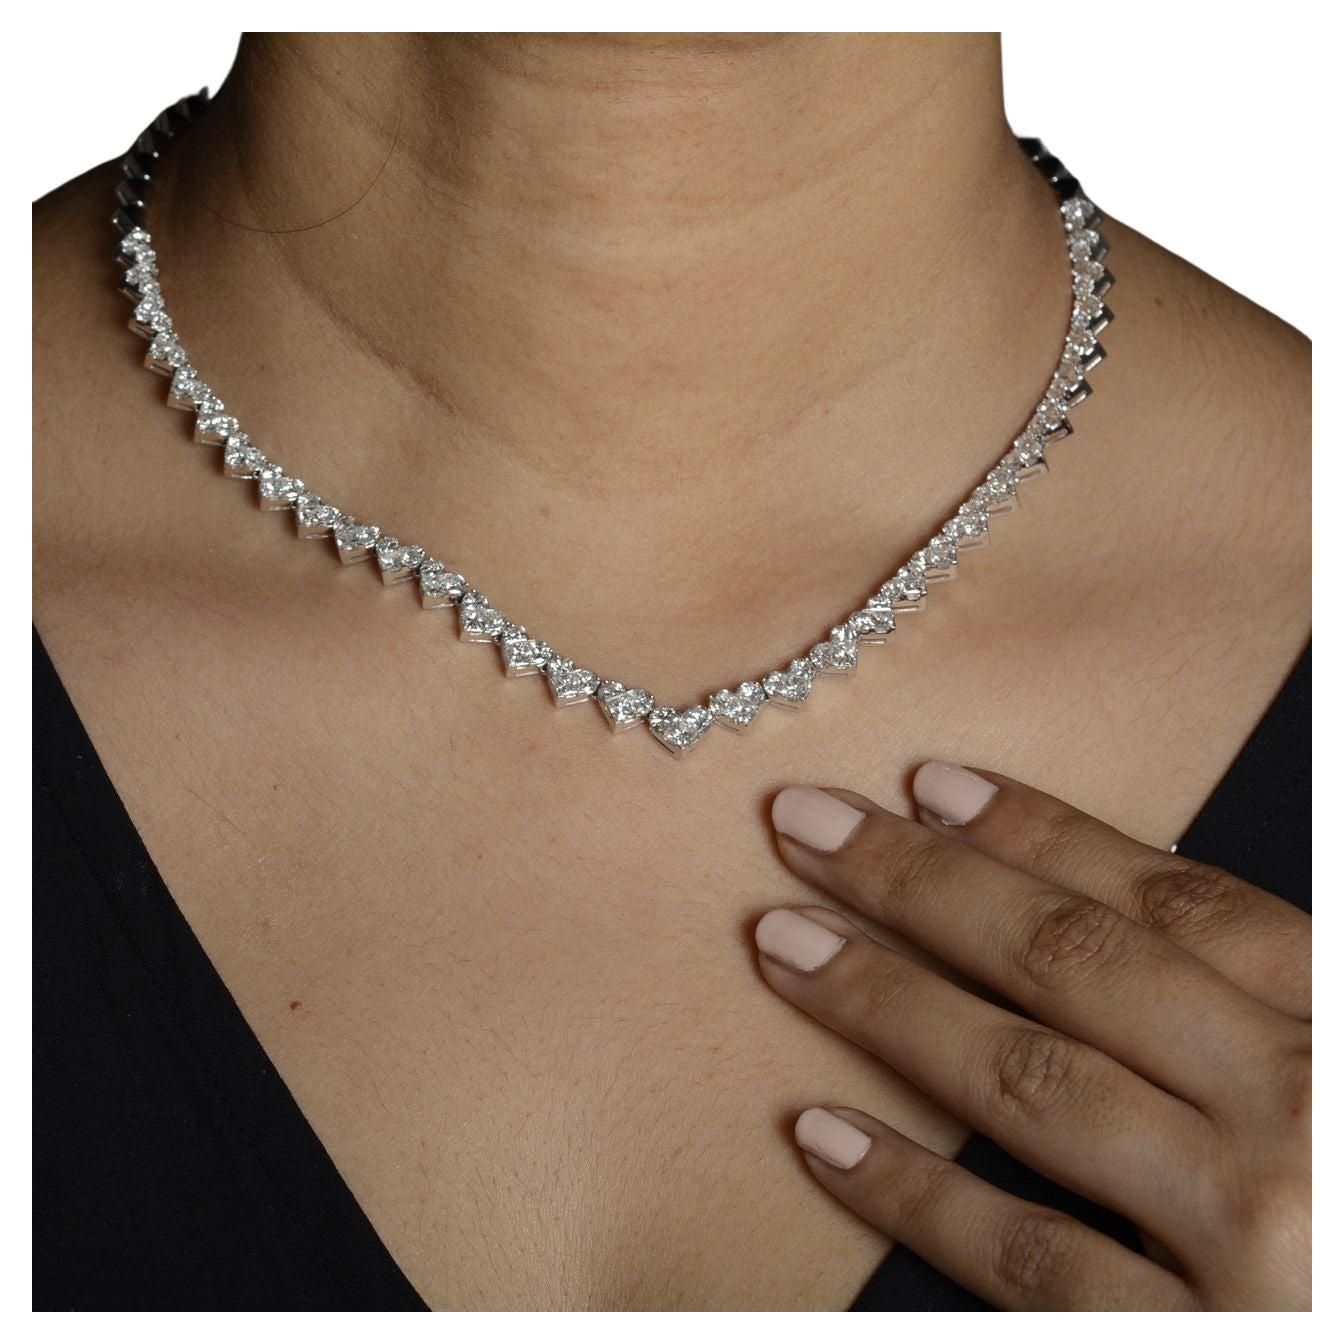 16.80 Carat Heart Shape 18K White Gold Necklace 